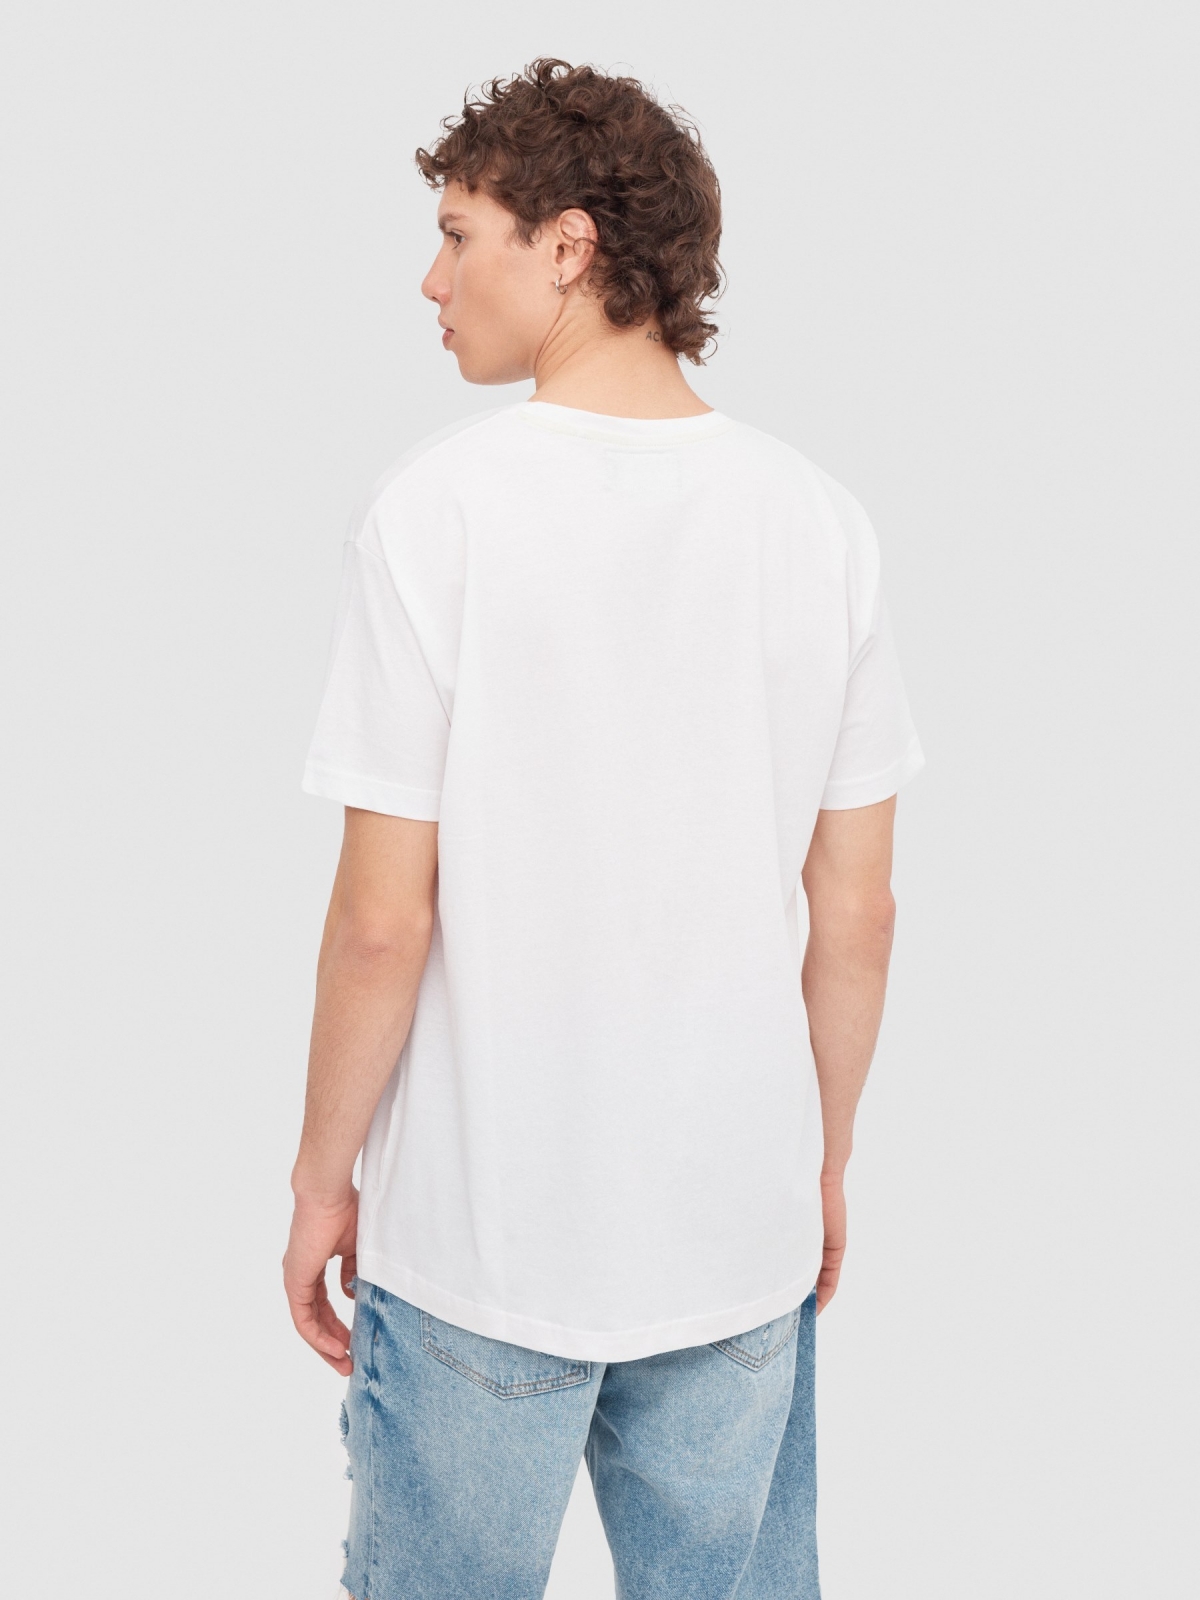 Camiseta calavera neón blanco vista media trasera